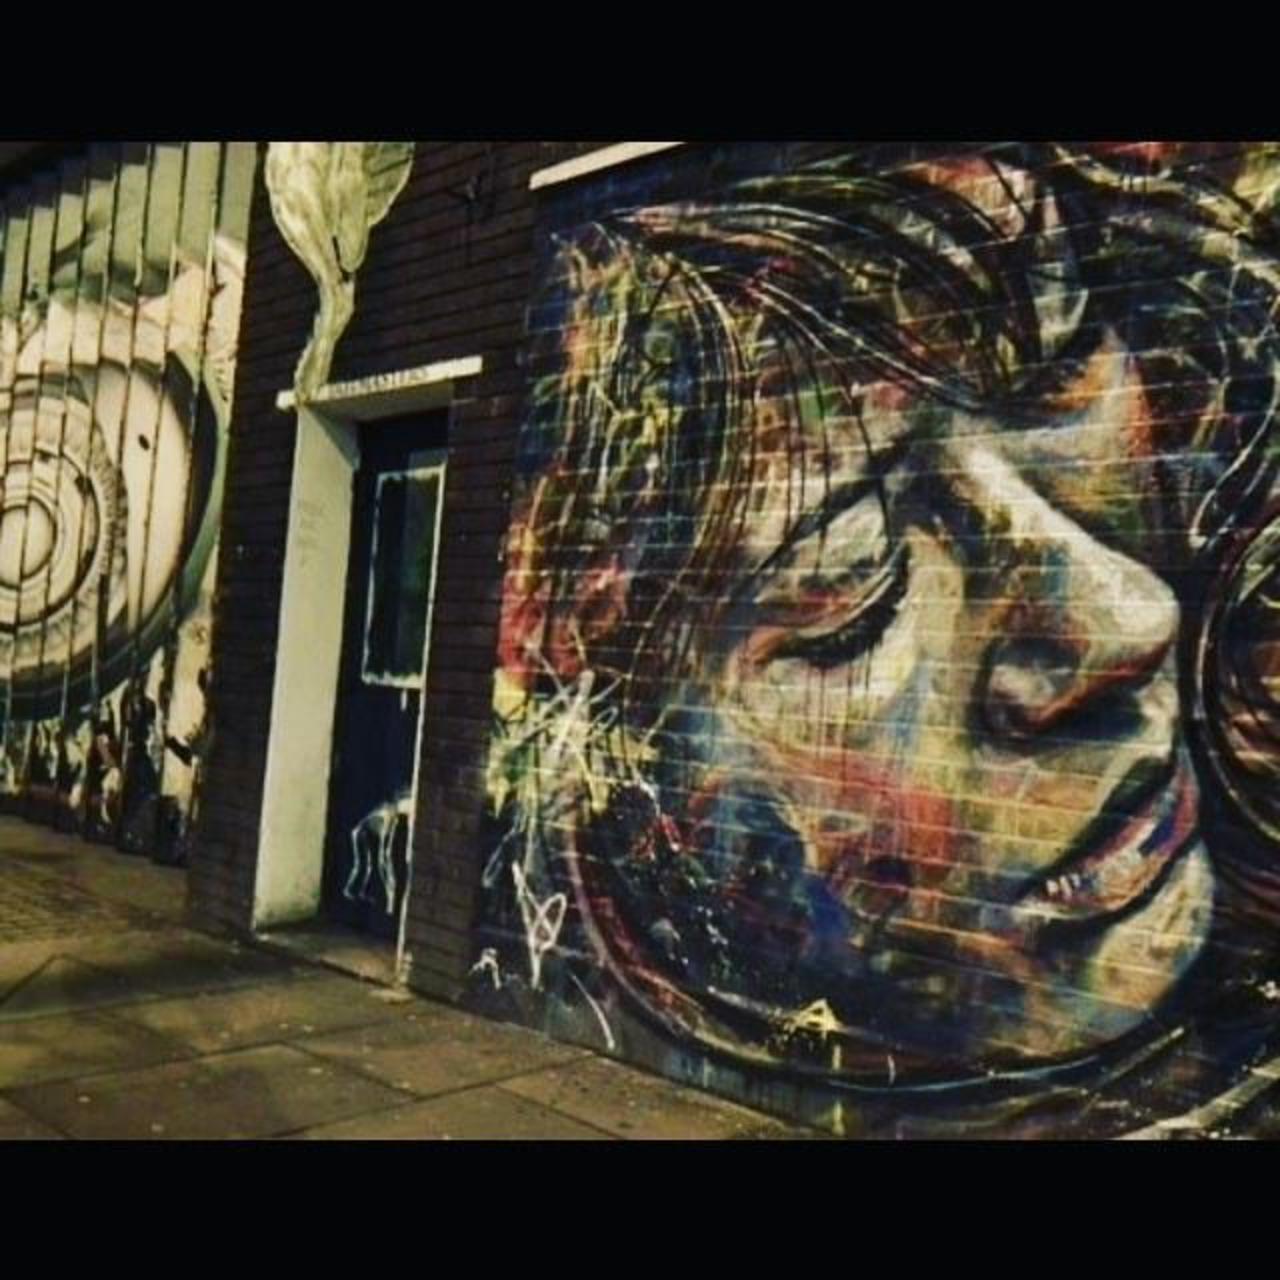 via #sami_cinou "http://bit.ly/1LuAVS3" #graffiti #streetart http://t.co/qGx8khheDI